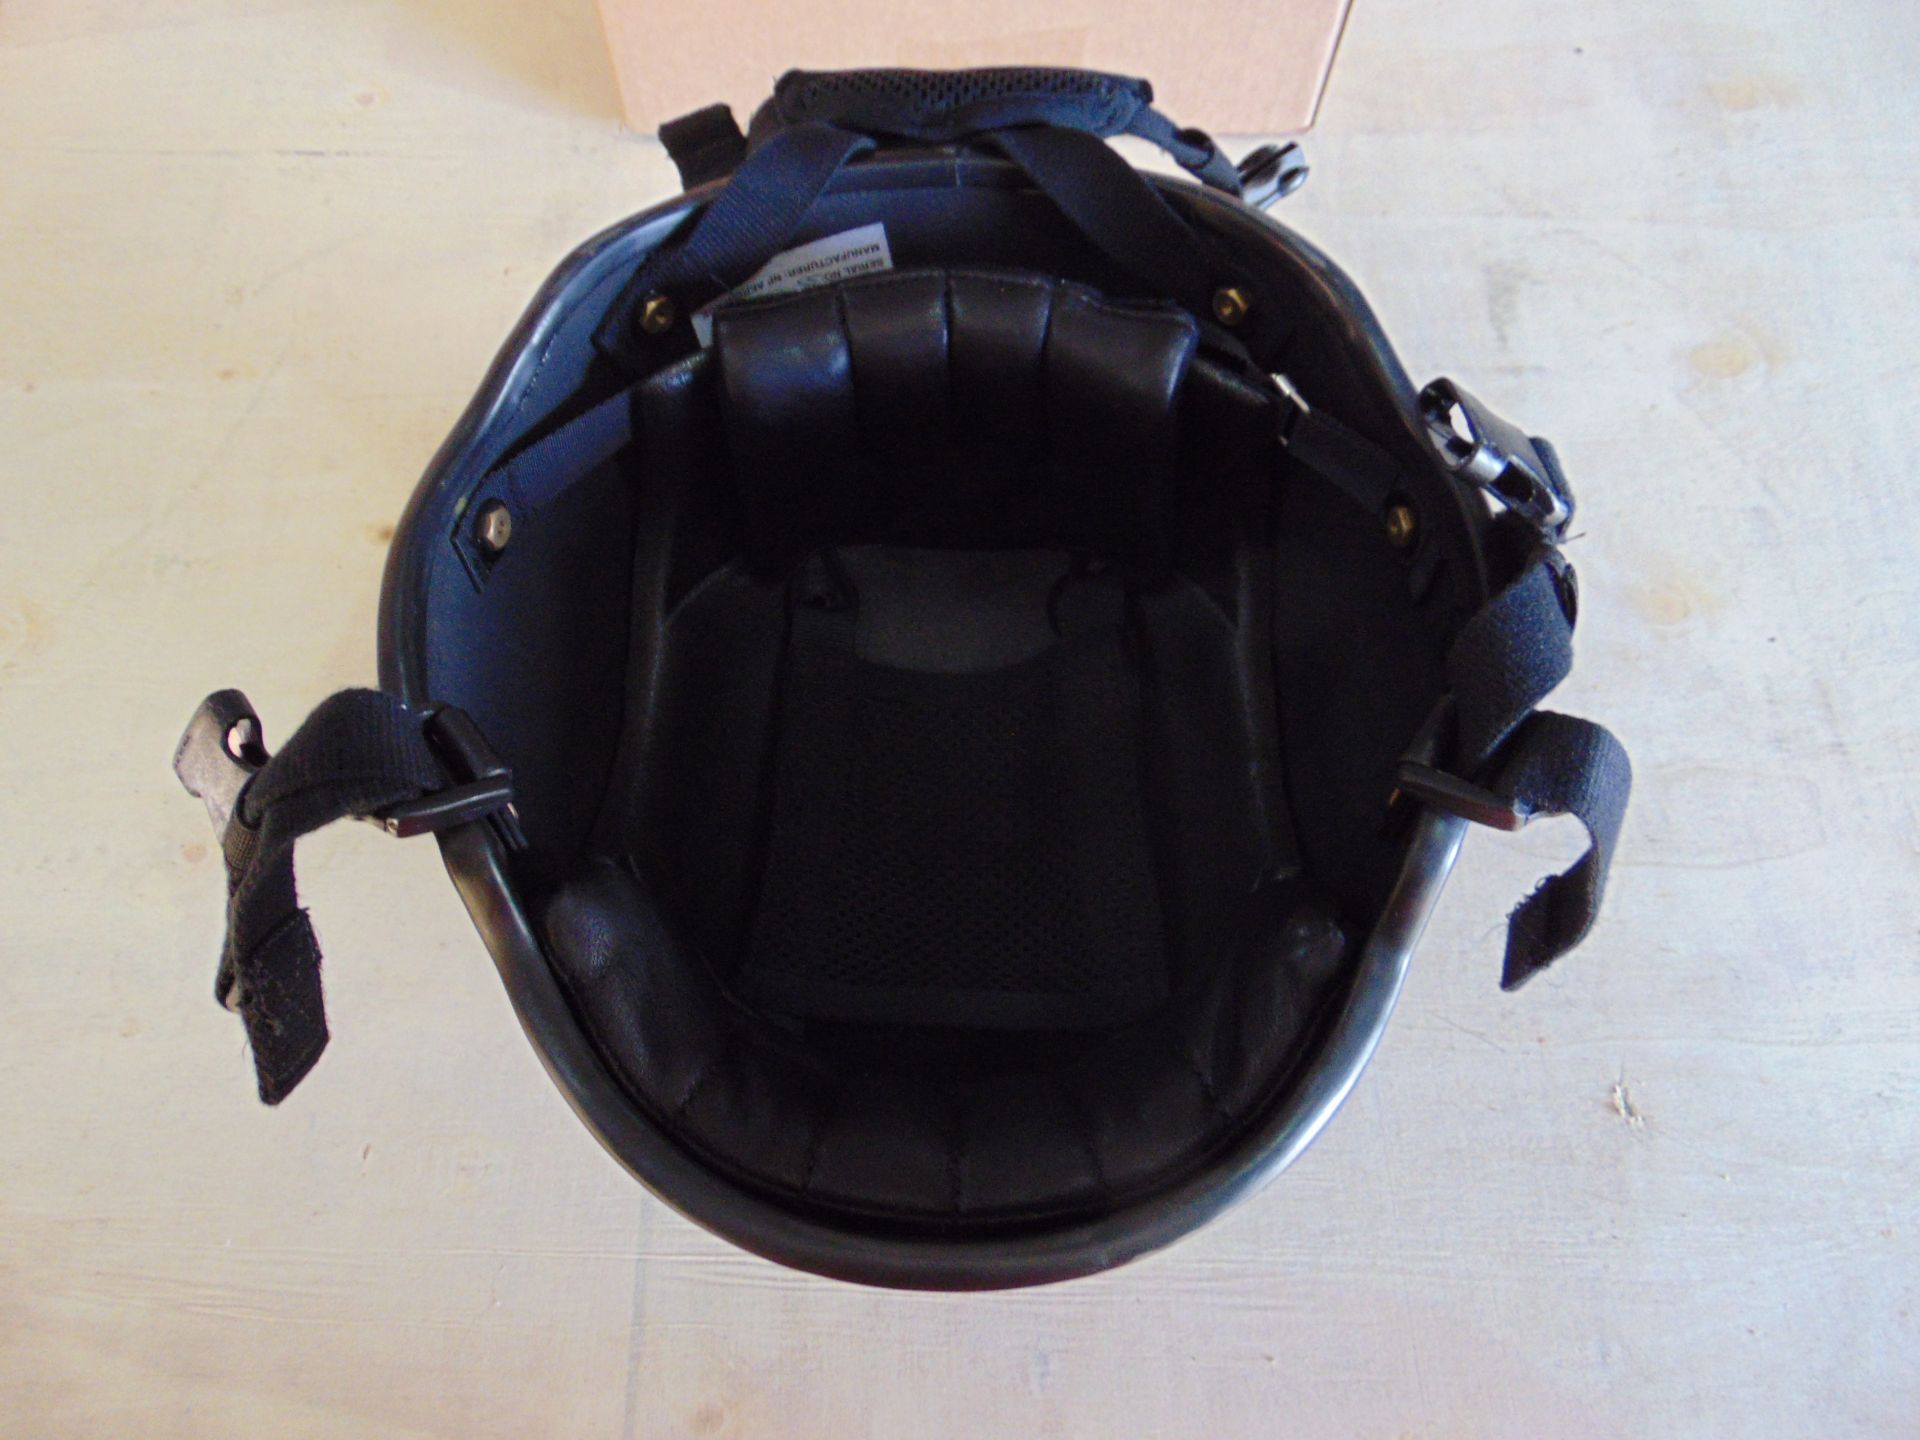 Galvion Batlskin Viper A5 Ballistic Helmet Size L - Image 3 of 4